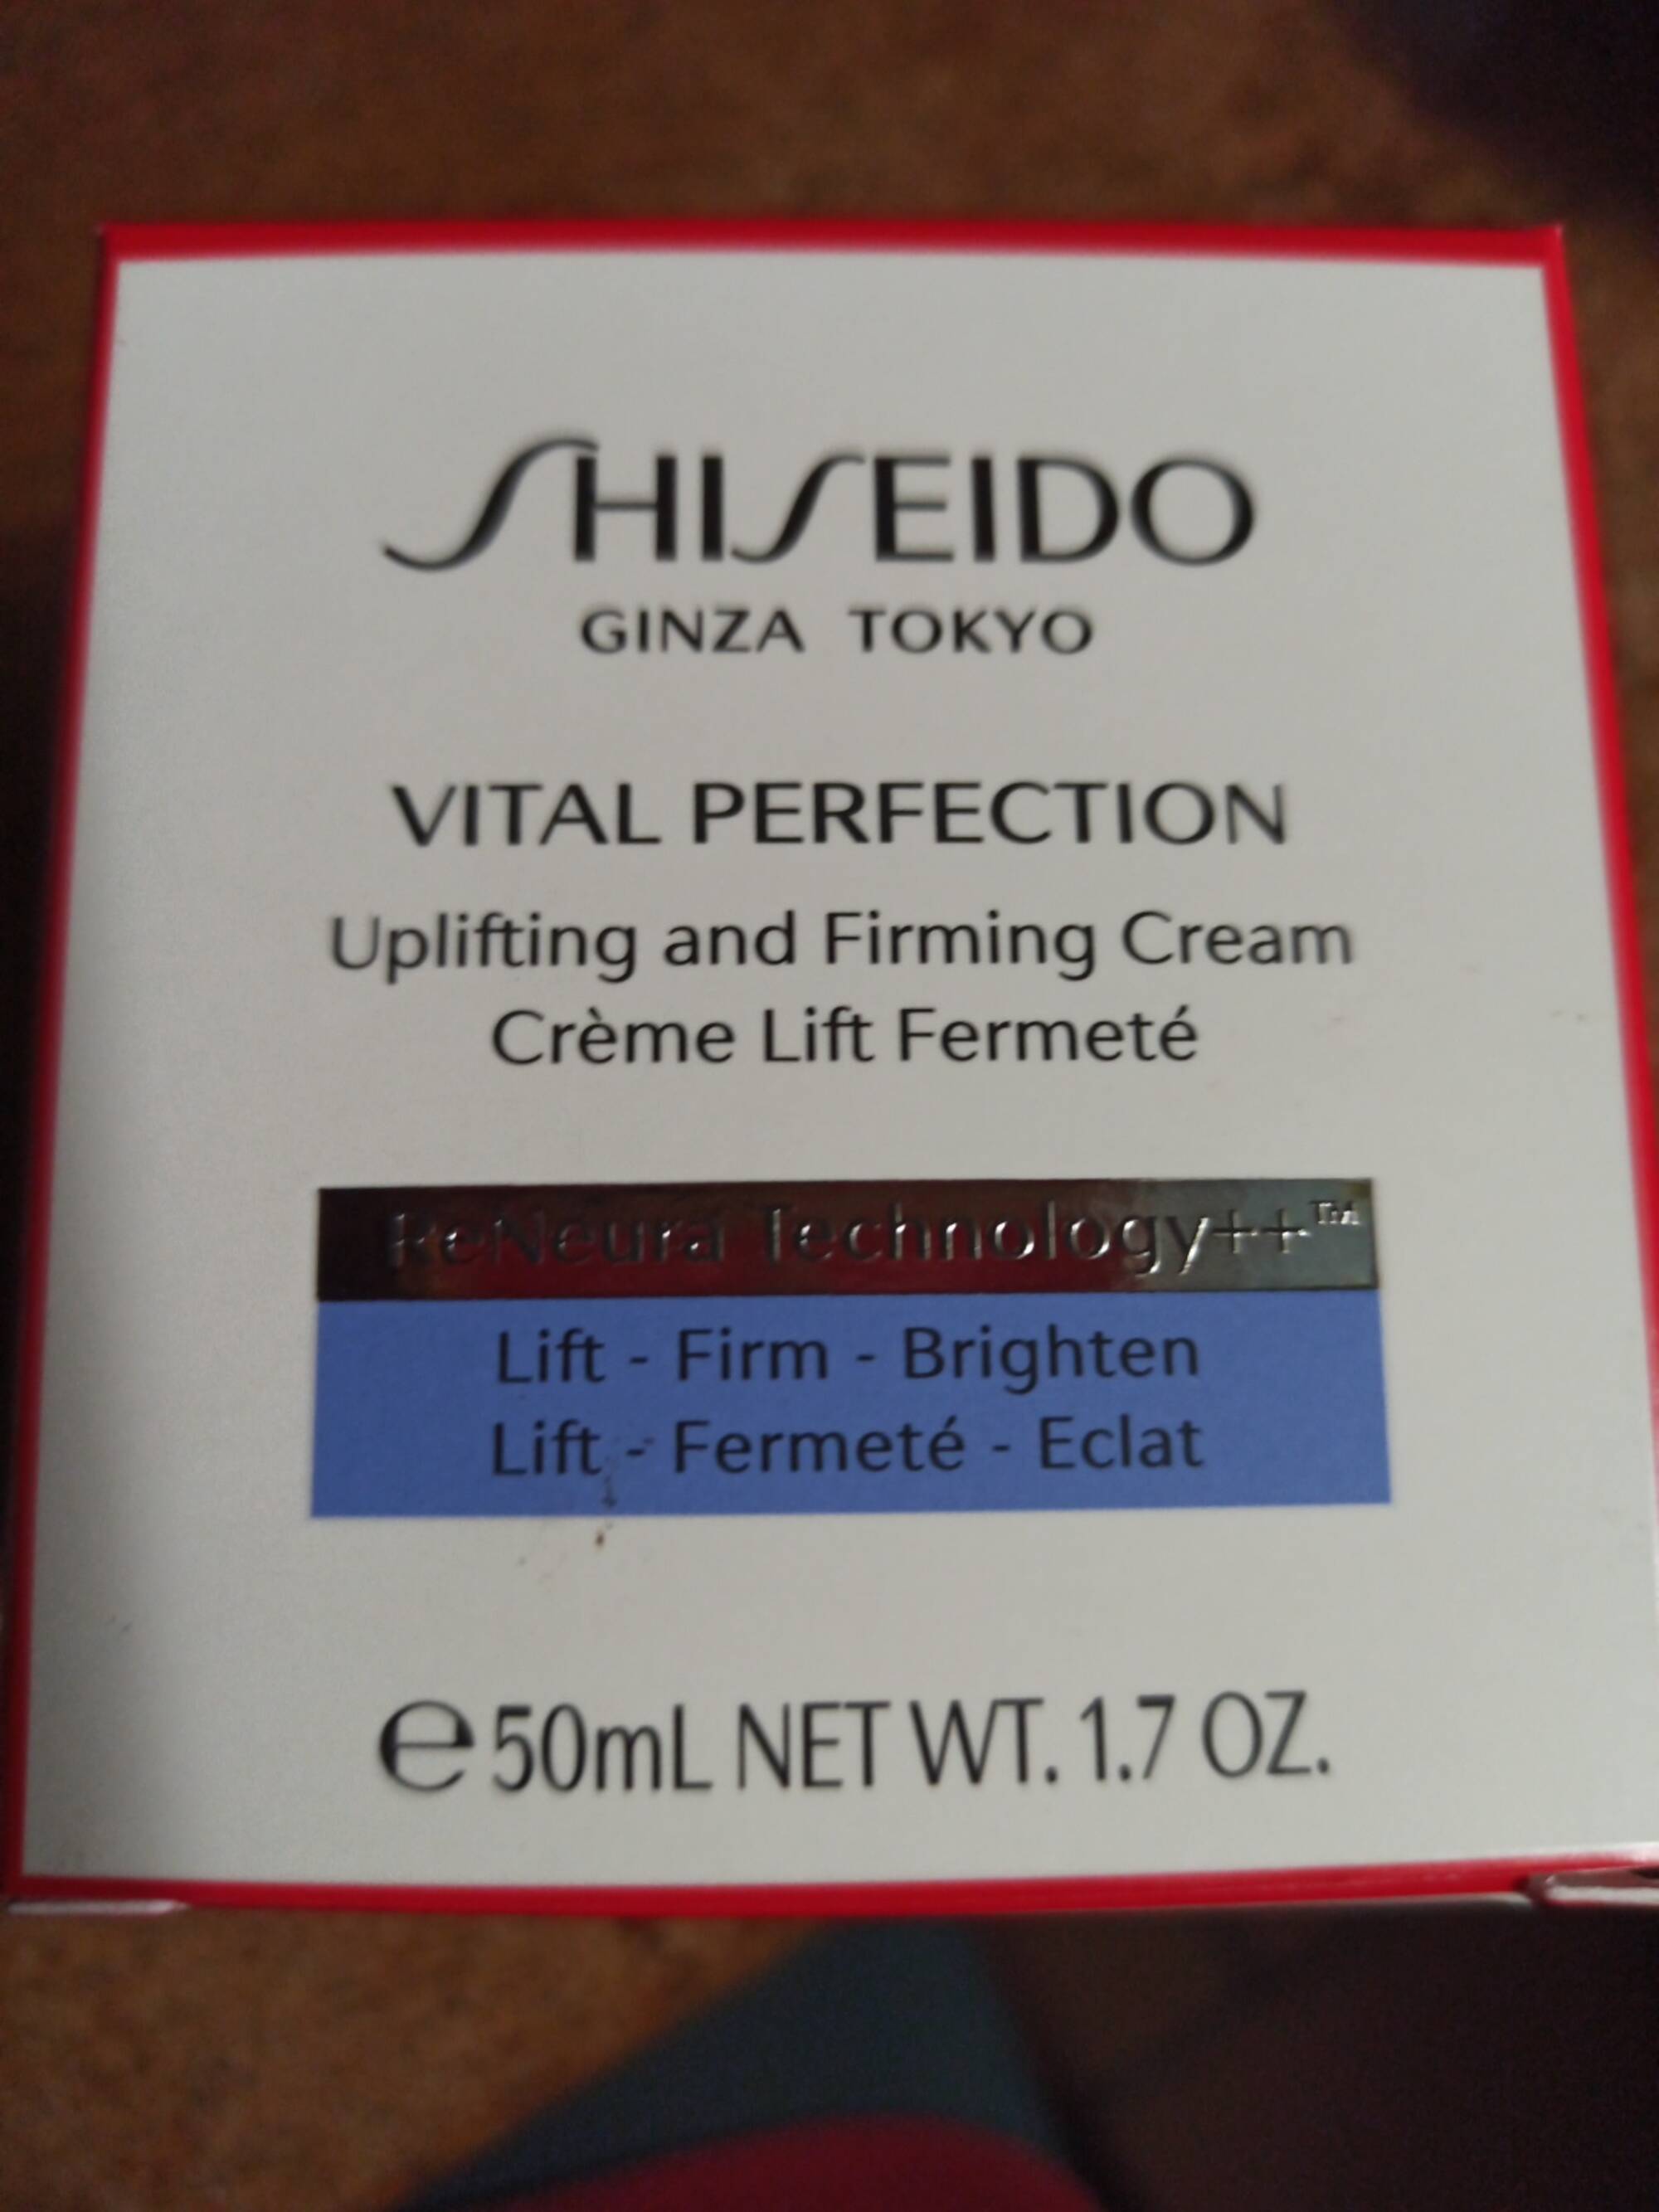 SHISEIDO - Vital perfection - Crème lift fermeté